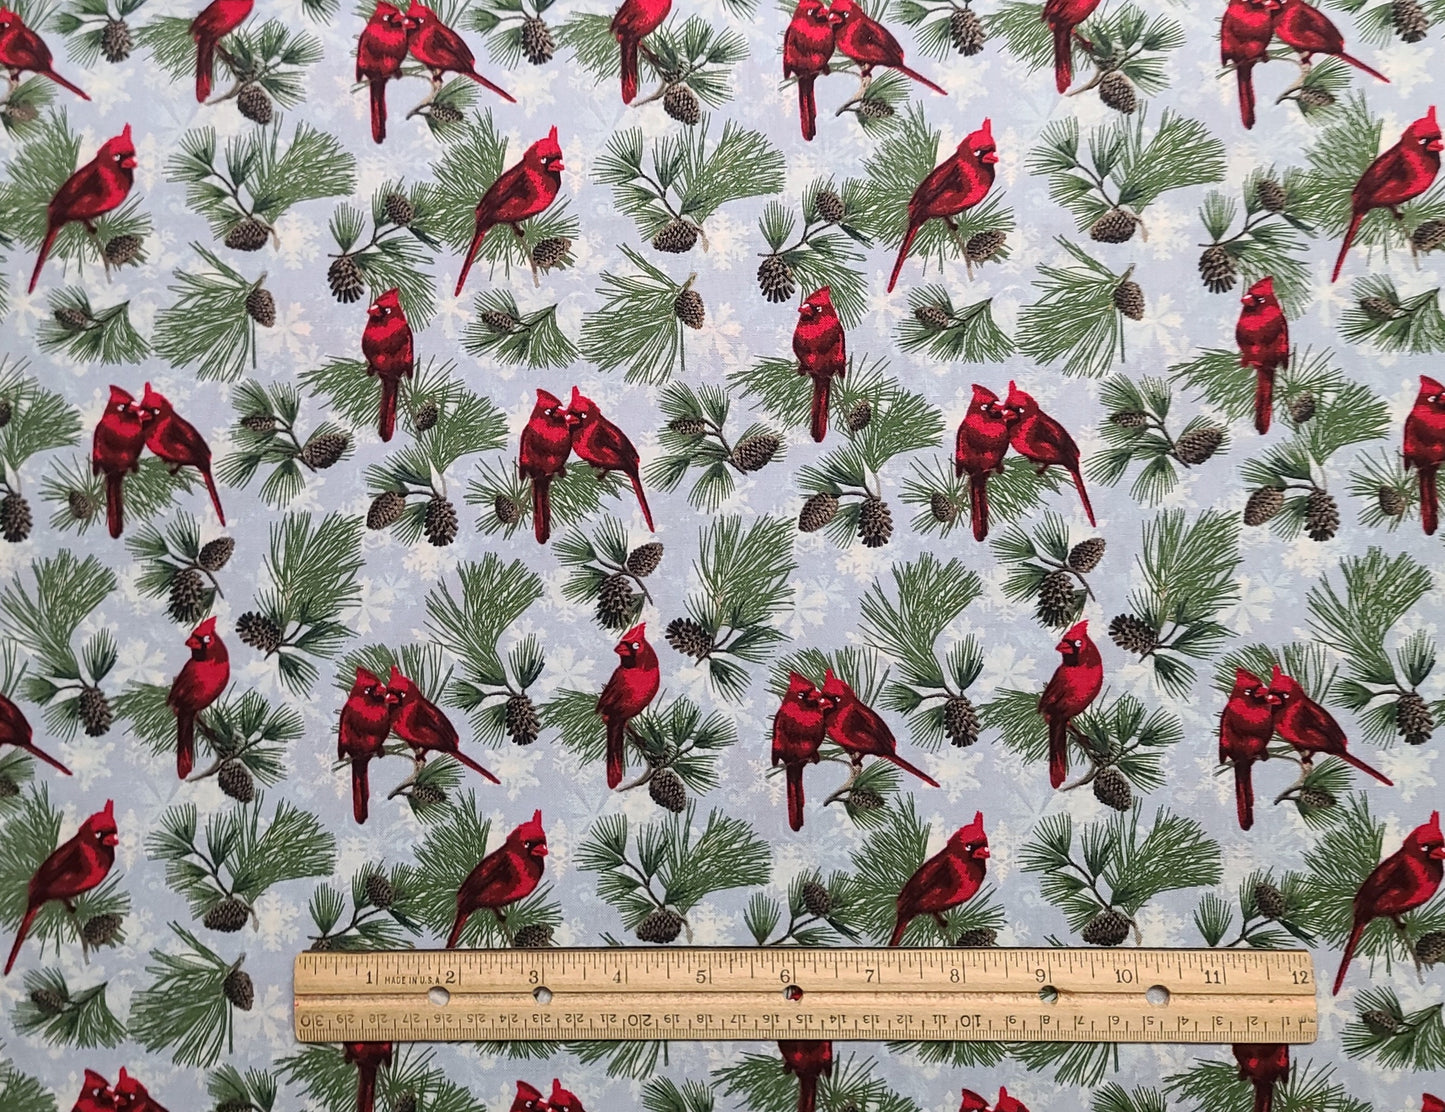 EOB - David Textiles Inc - Pale Blue Fabric / White Snowflake, Cardinal, Pine Tree and Cones Print